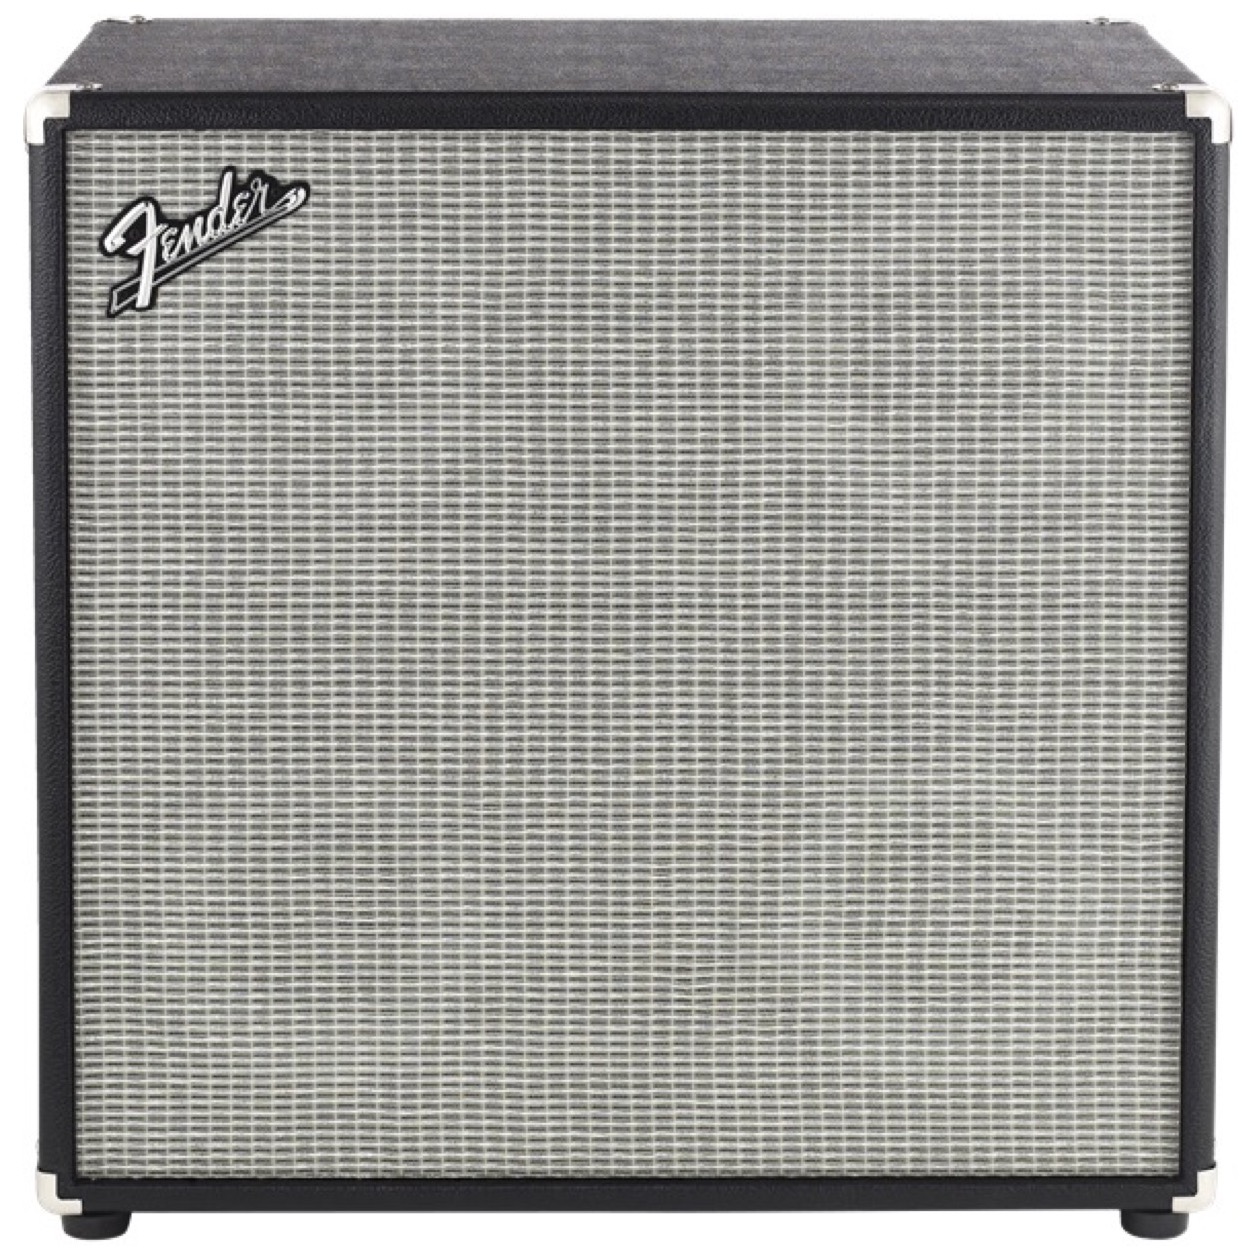 Fender Bassman 410 Neo, Black/Silver 500 watts 4 x 10” Fender Special Design Eminence® U.S.A Speaker Enclosure